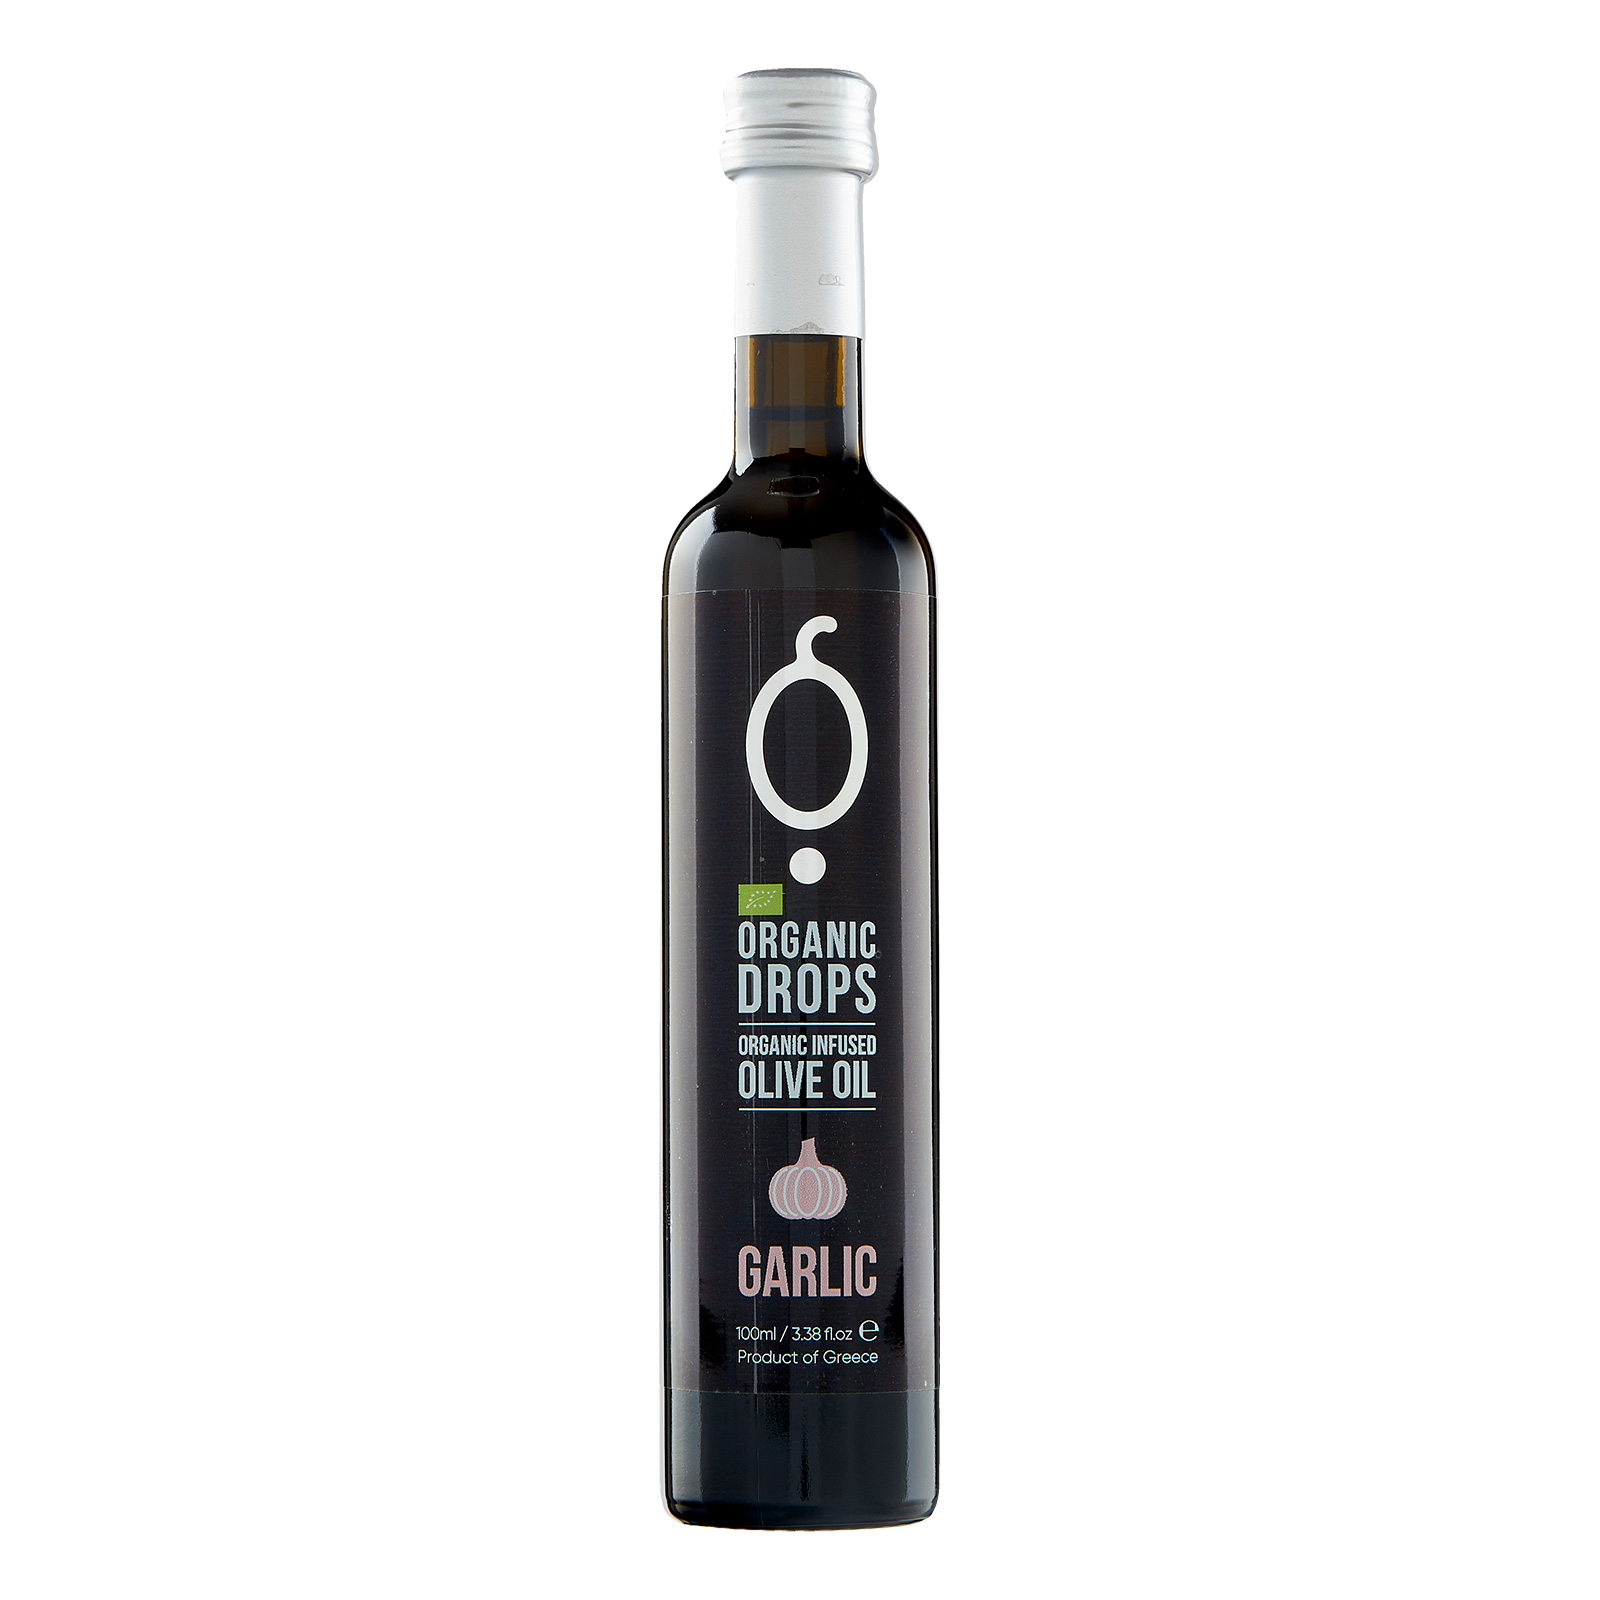 Organic Drops Garlic Olive Oil 3.38 fl.oz Bottle